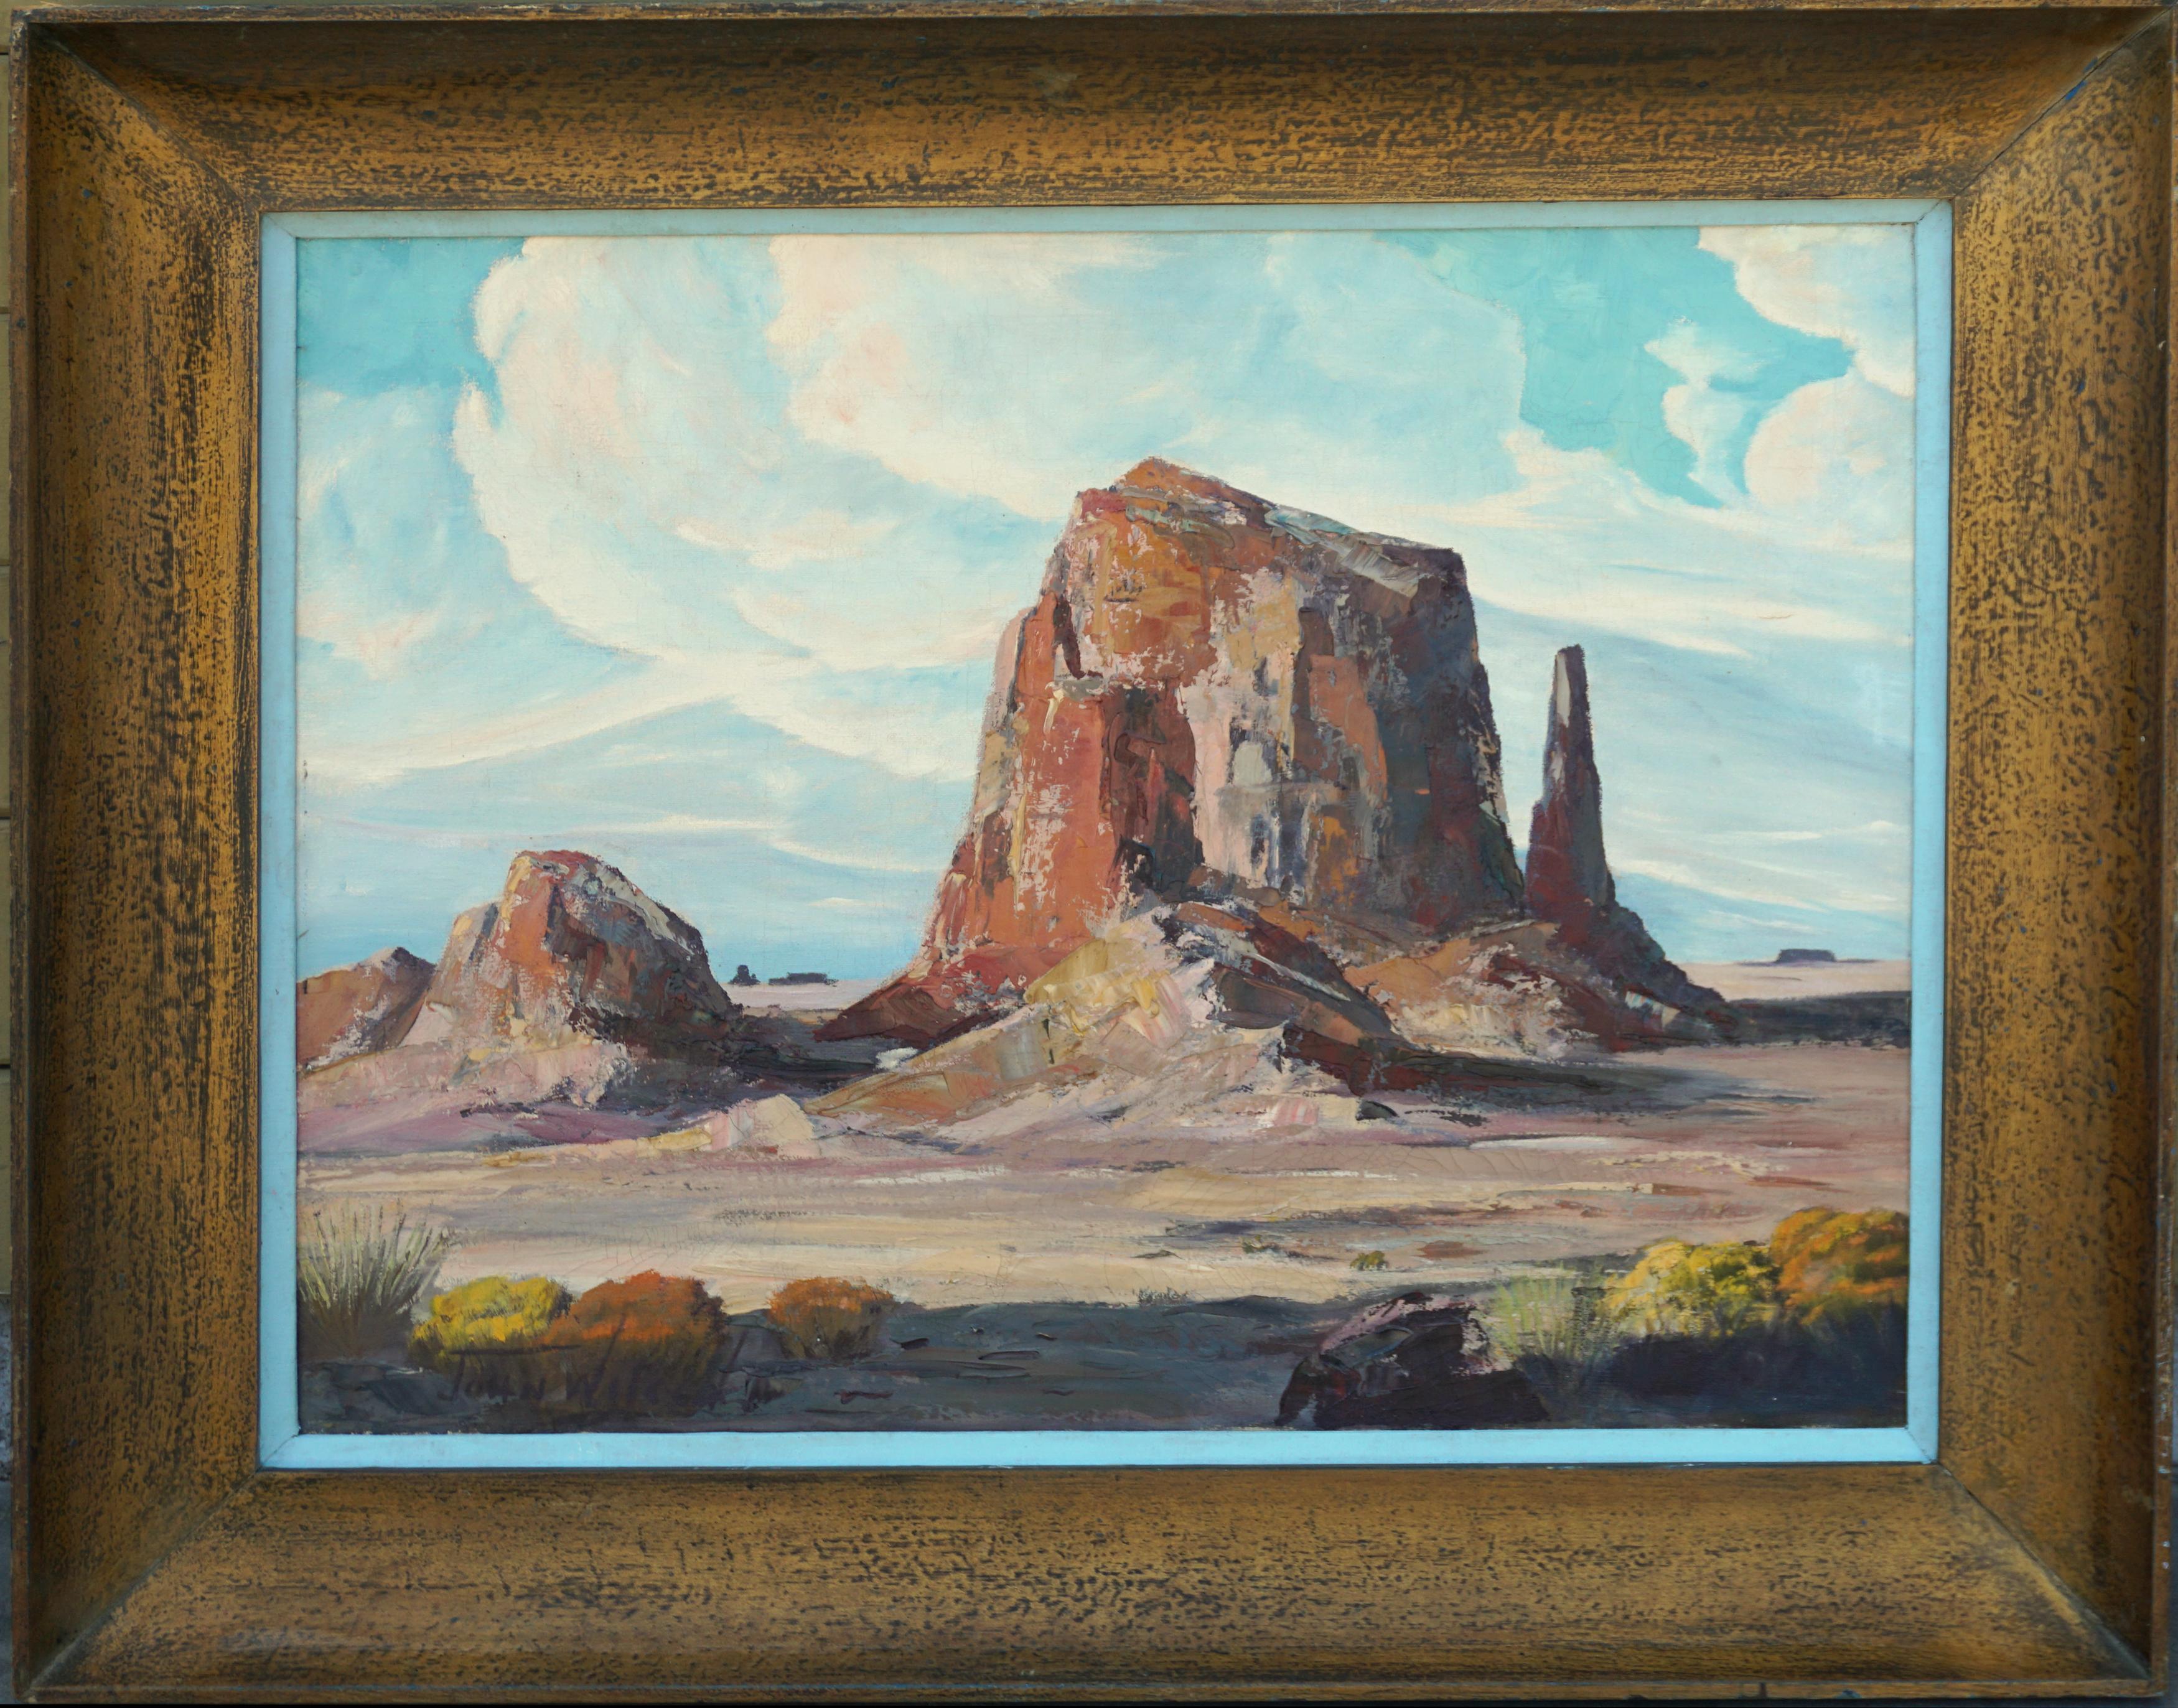 Sherman Rocks - Mid Century Utah Desert Rock Formation Landscape, 1940s